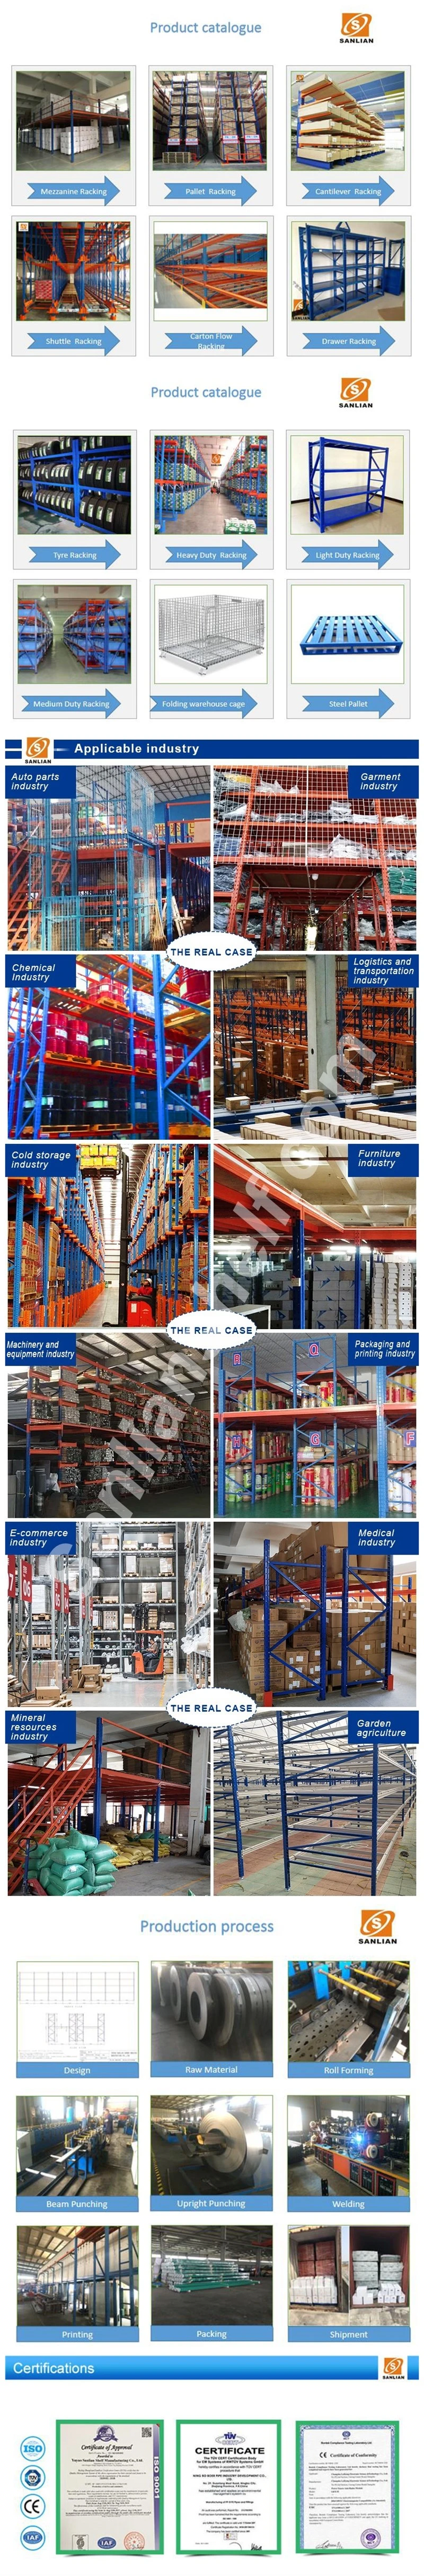 Fifo Warehouse Industrial Storage Steel Pallet Carton Gravity Flow Rack with Rollers